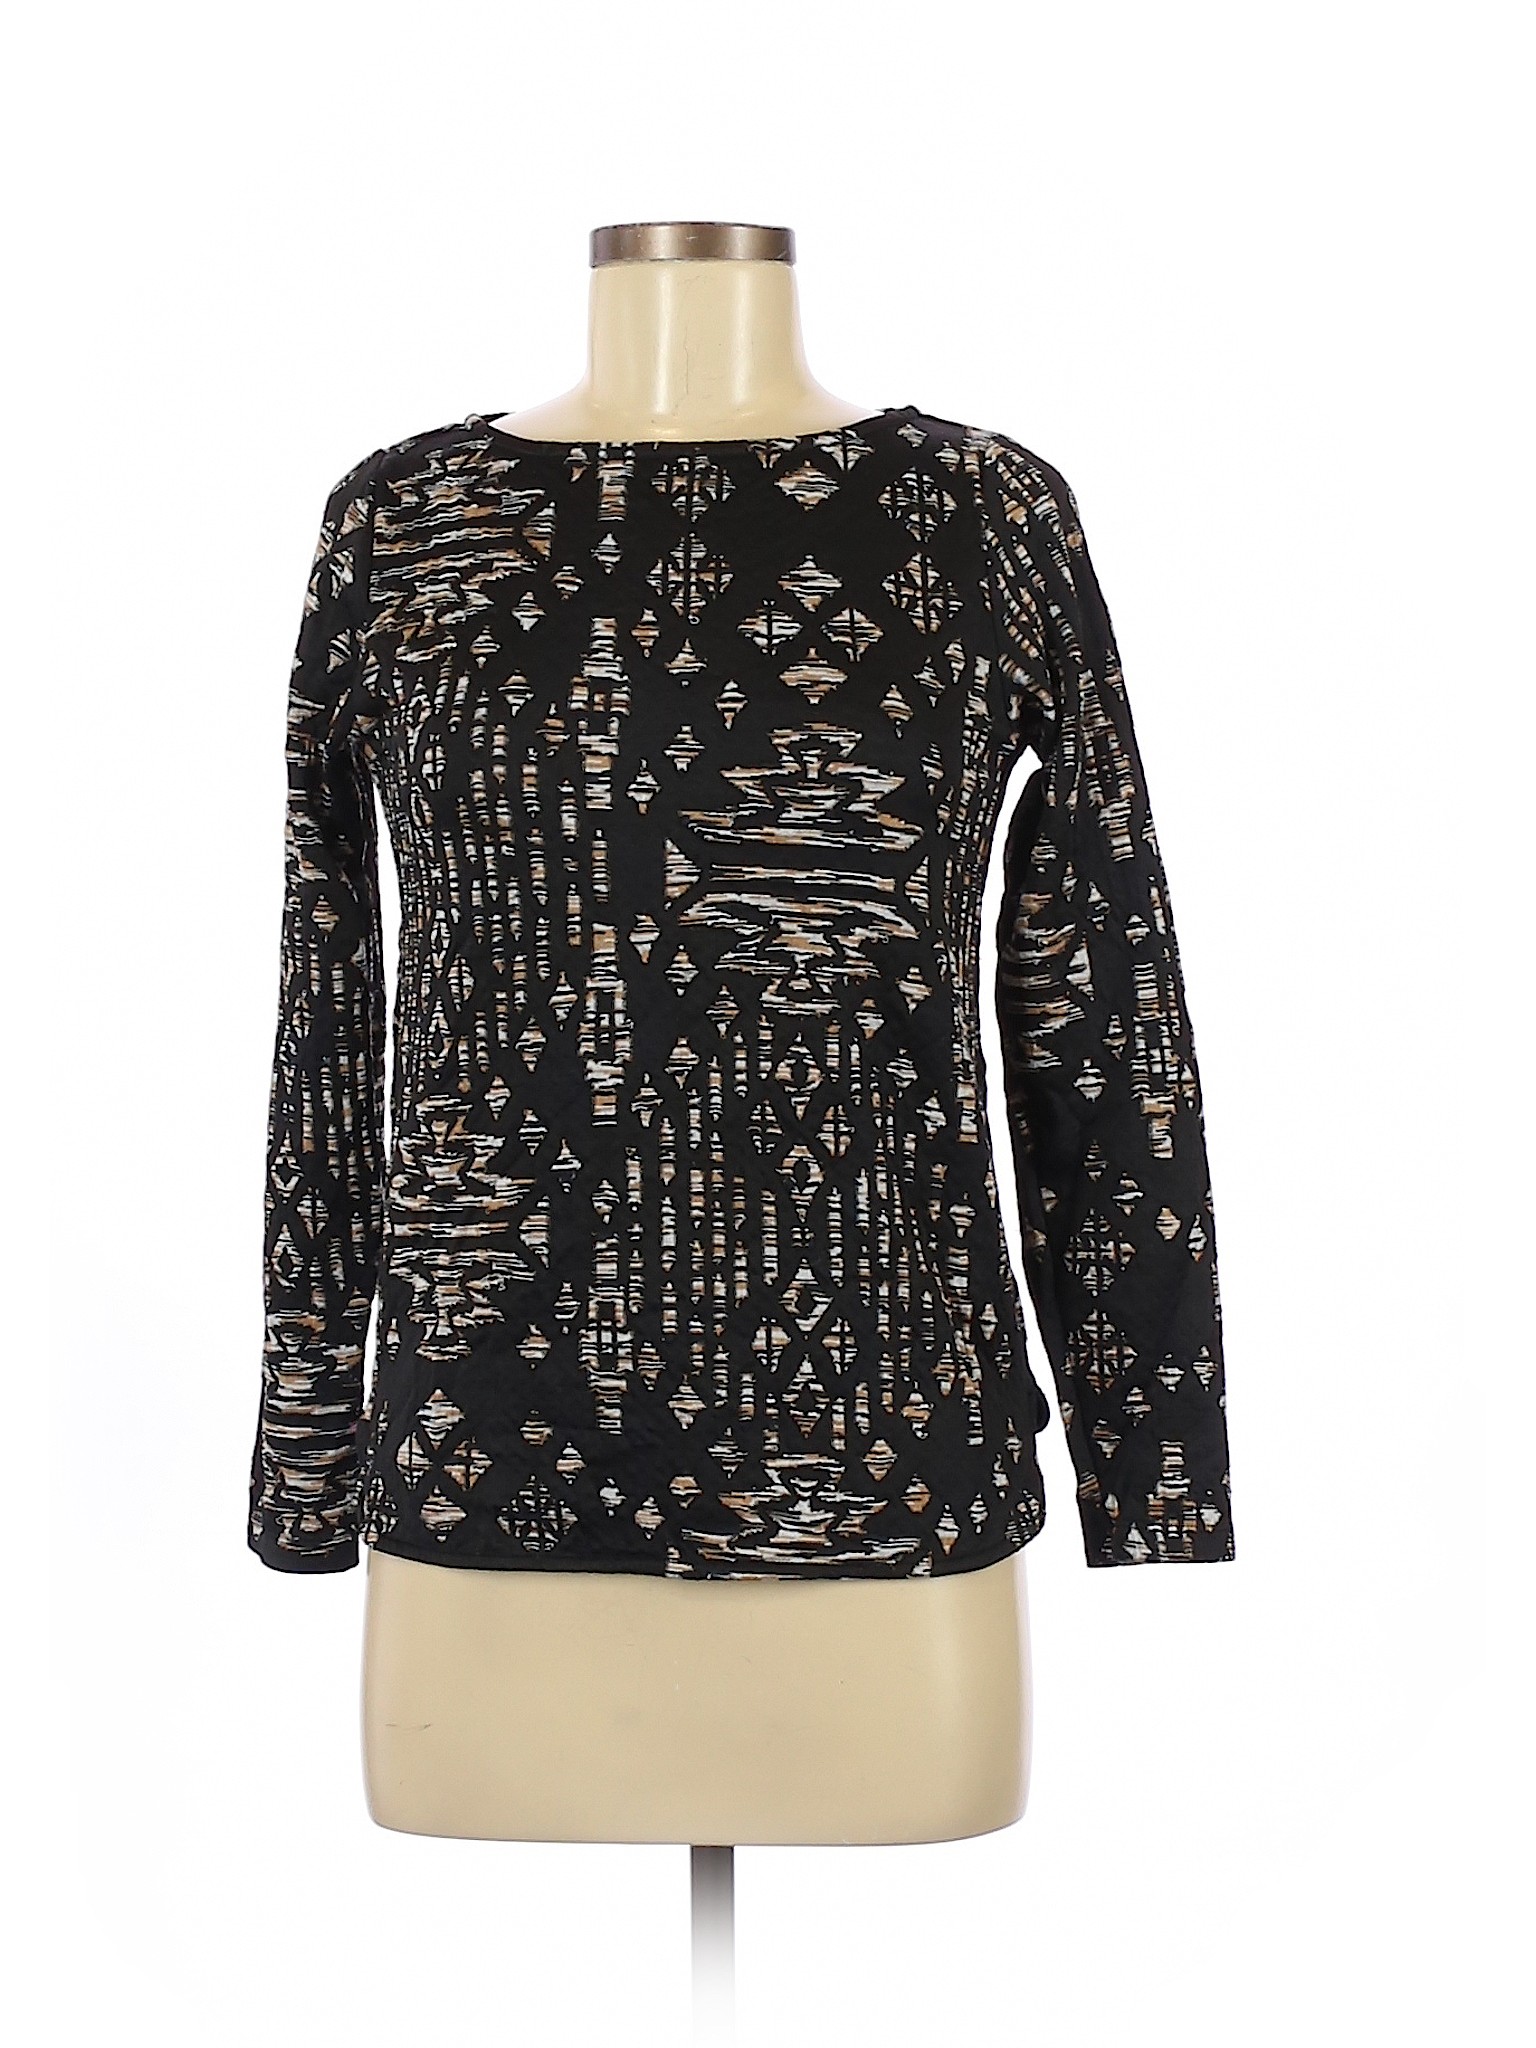 H&M Women Black Long Sleeve Top XS | eBay